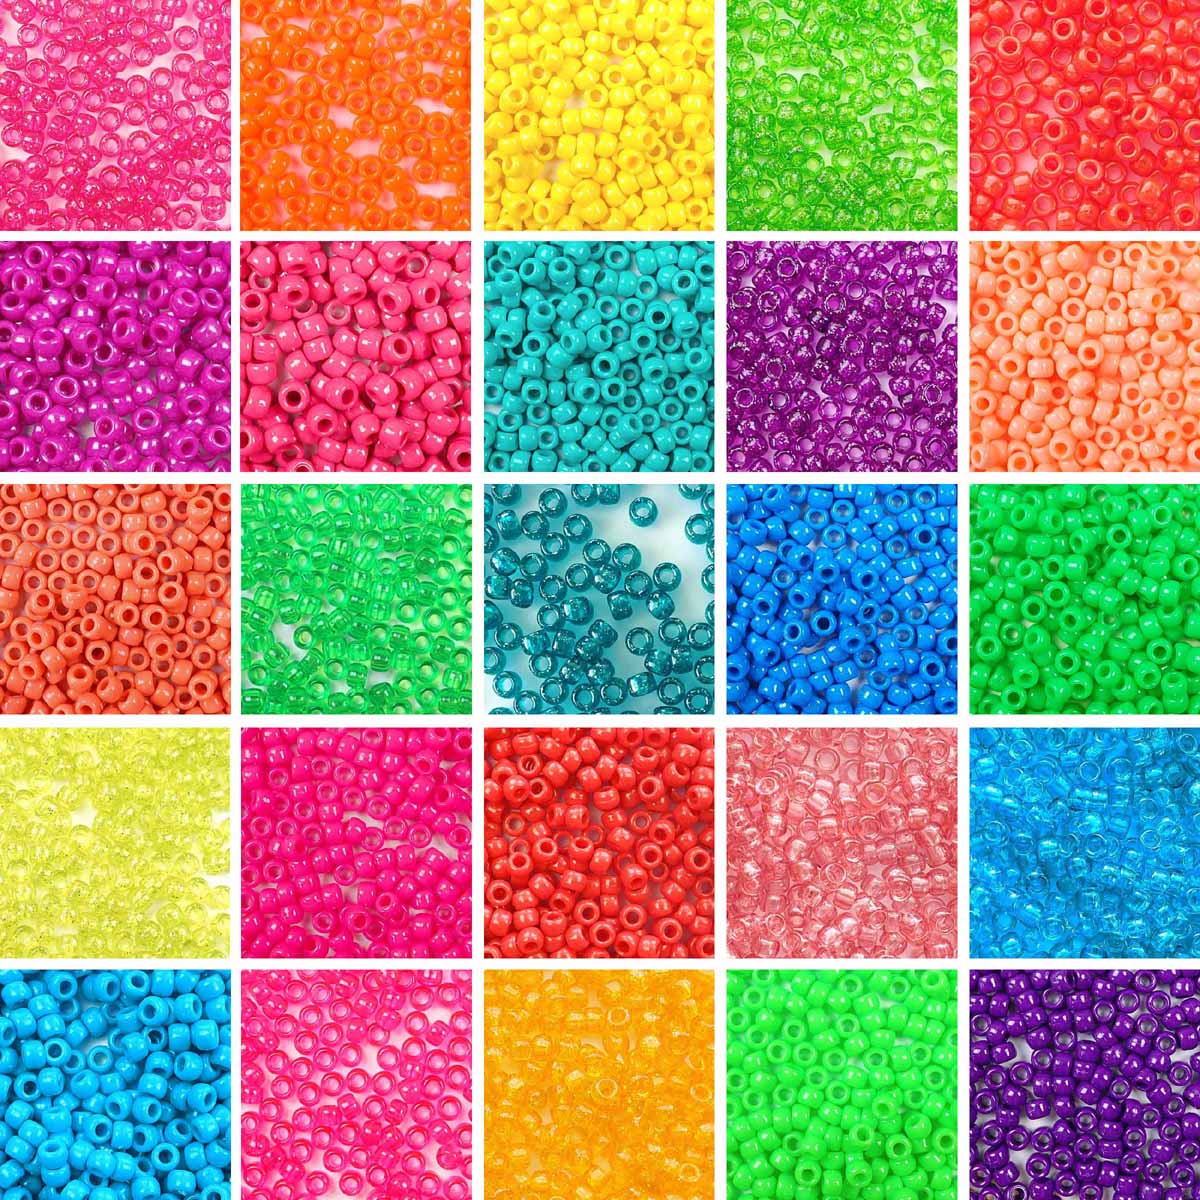 Pastel Transparent Multi Color Mix Plastic Pony Beads 6 x 9mm, 500 beads